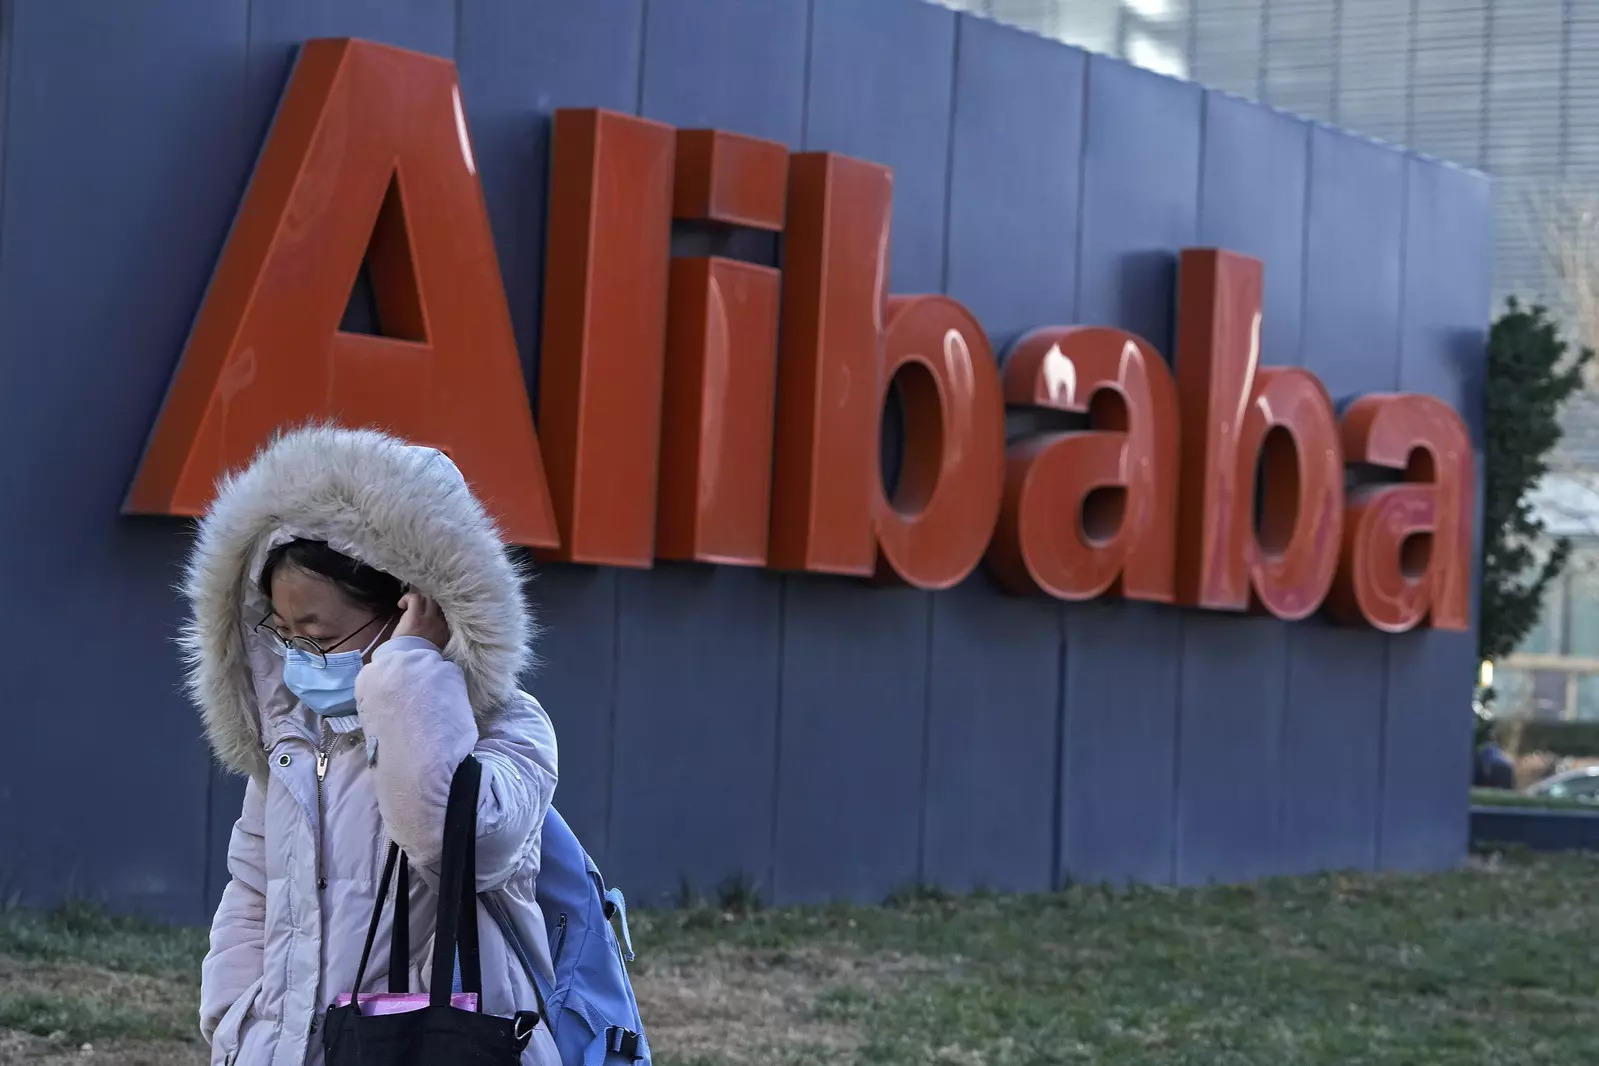 Alibaba beats quarterly profit estimates as COVID curbs ease, Retail Information, ET Retail